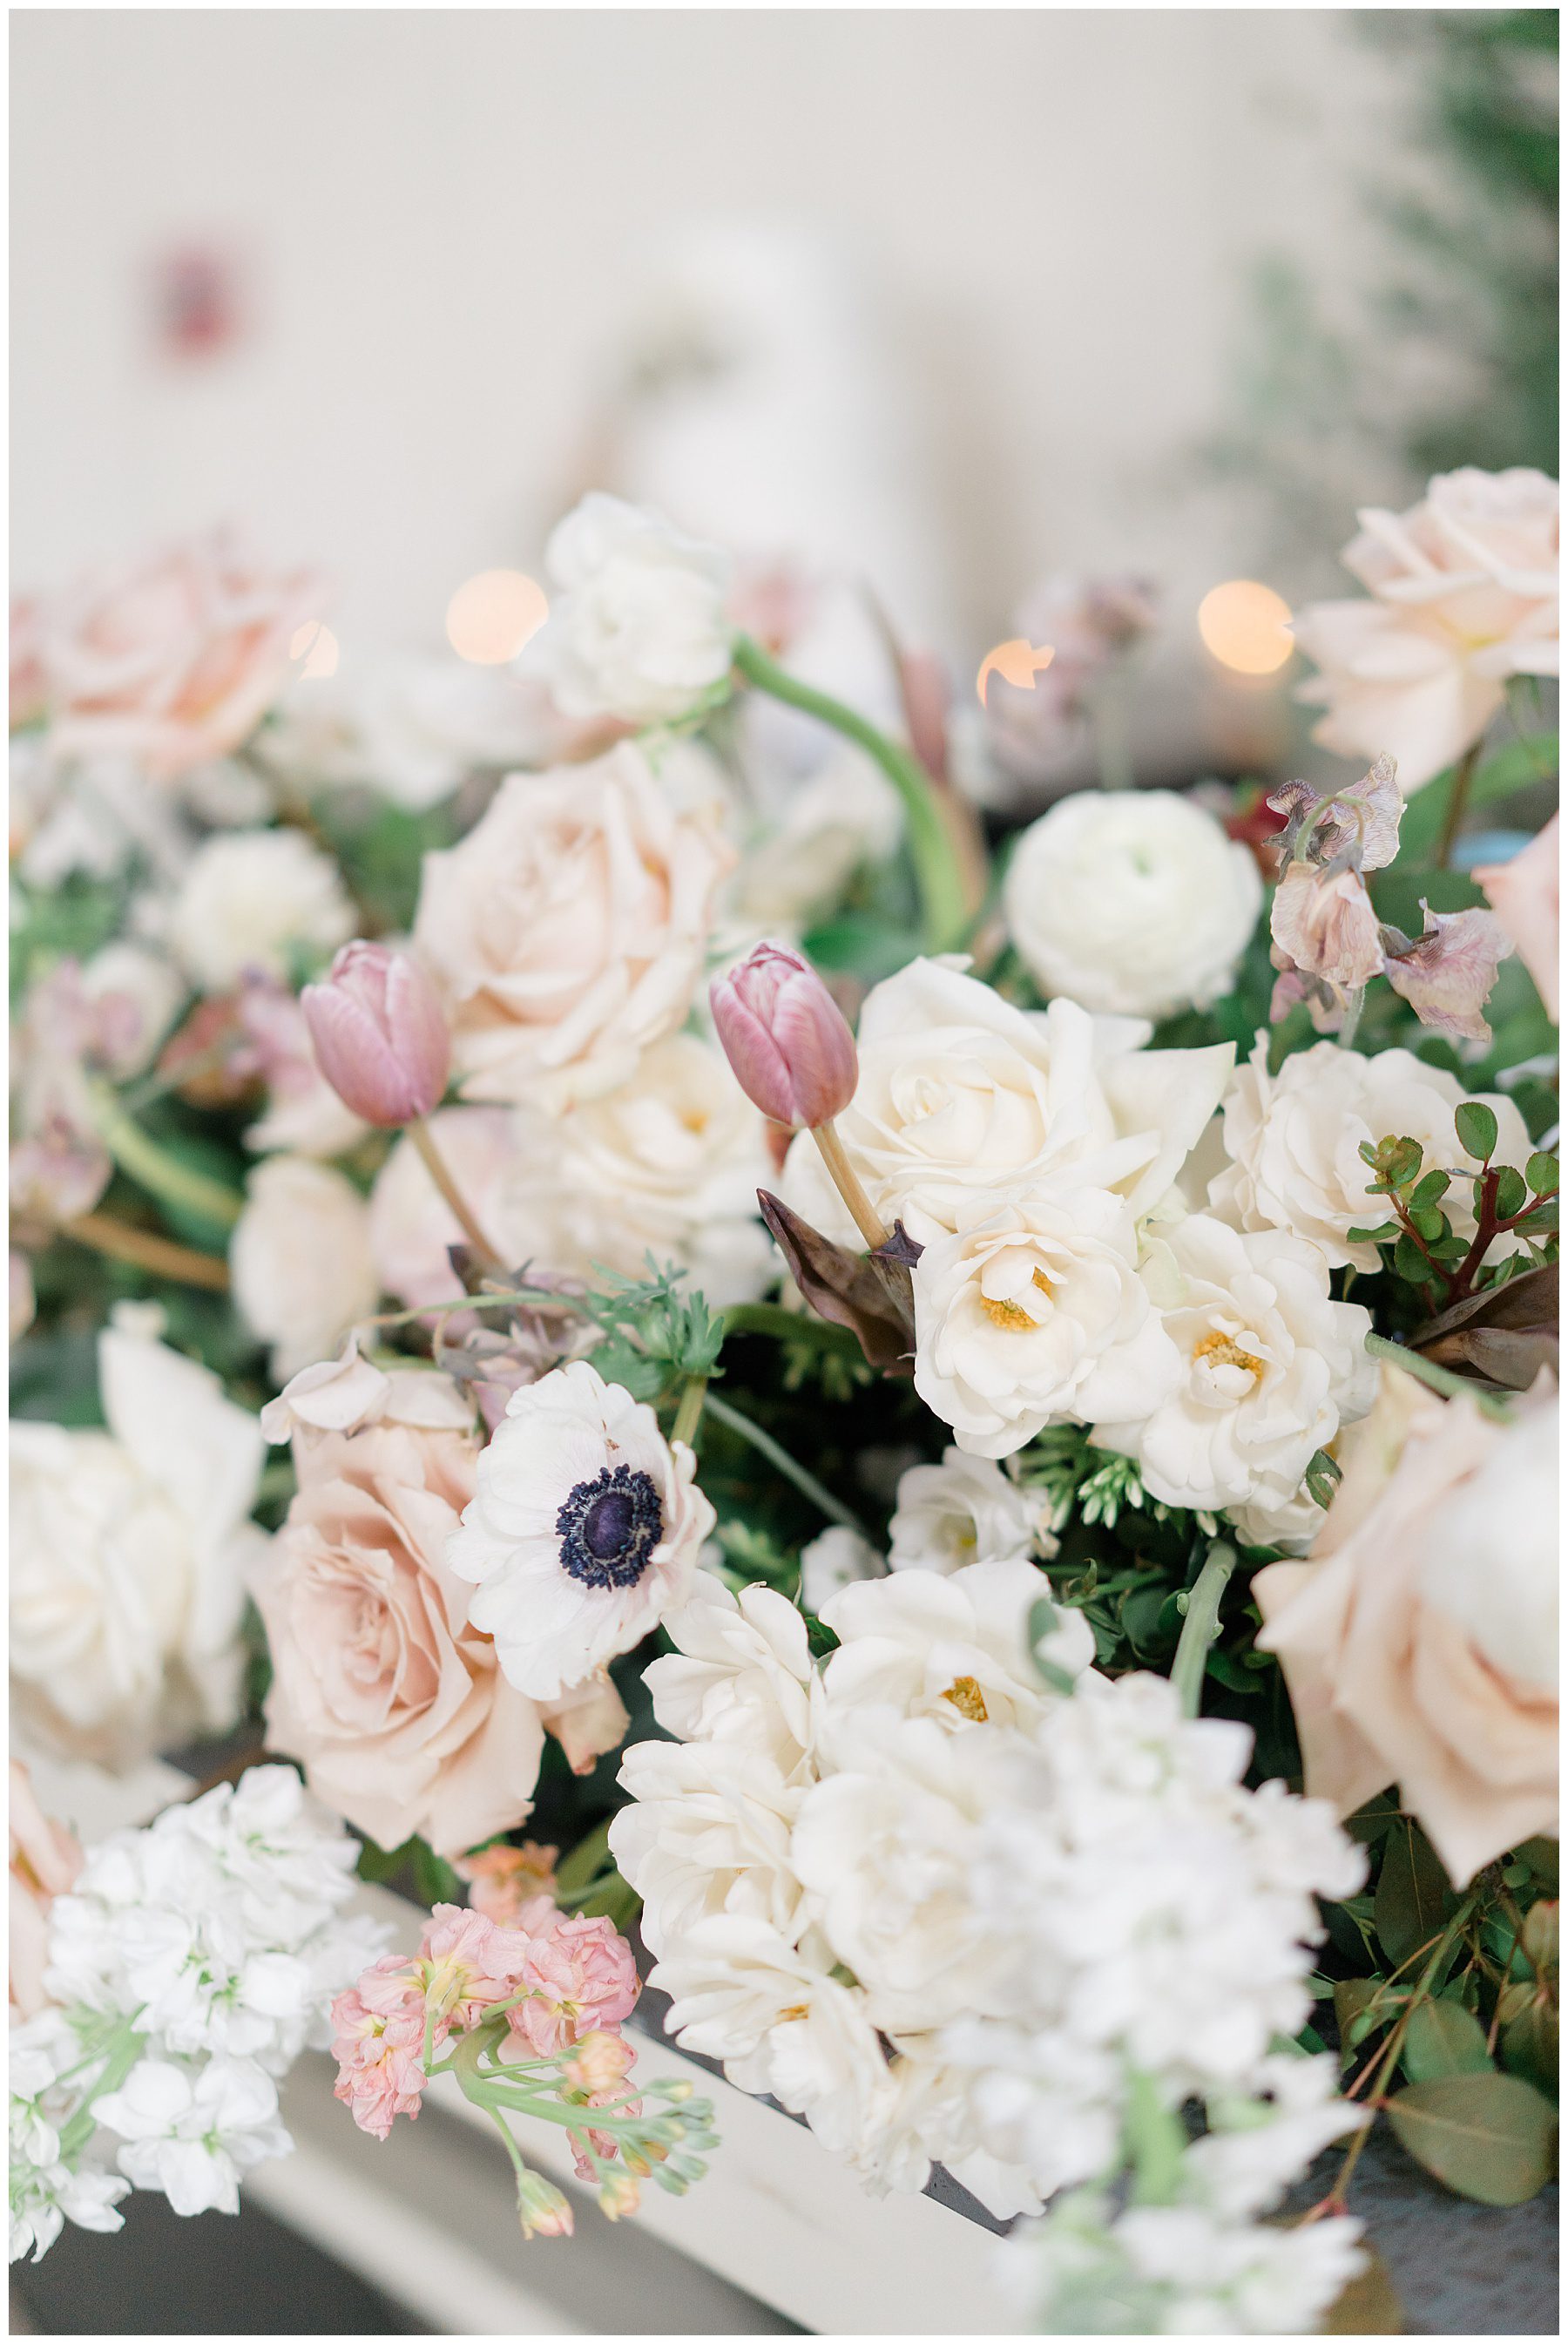 elegant and classic wedding flowers